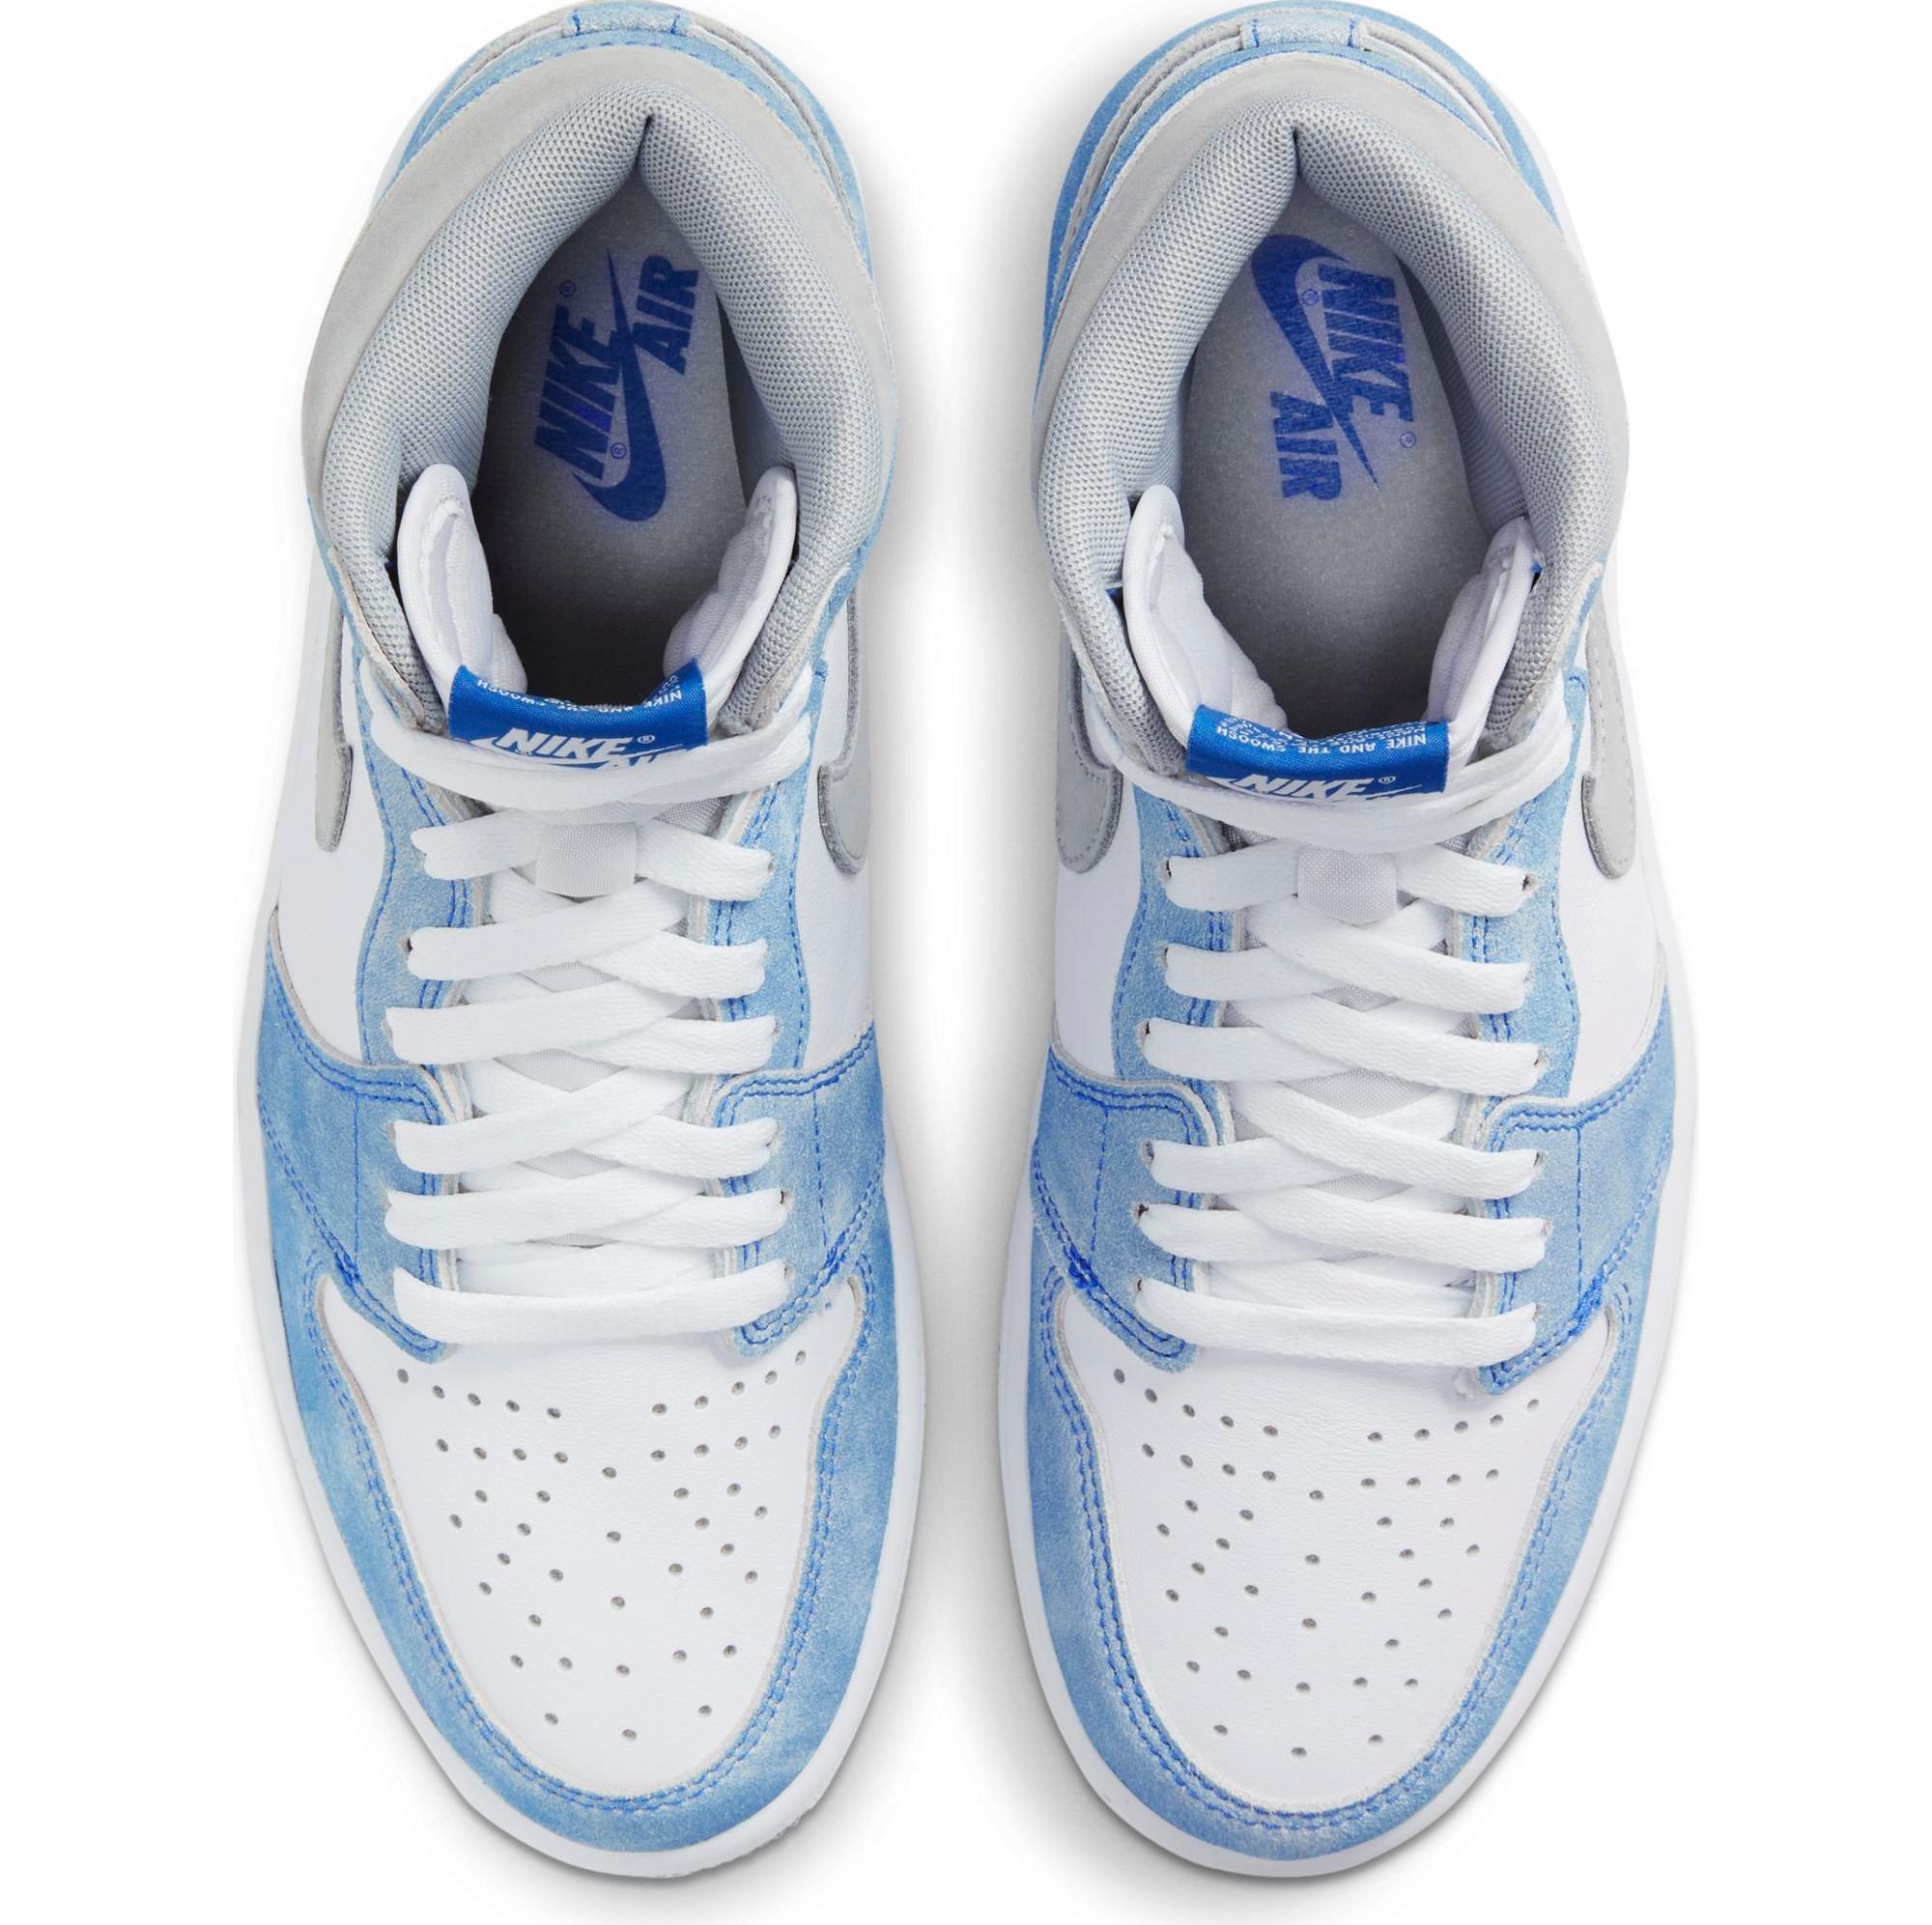 Sneakers Release – Jordan 1 Retro High OG “Hyper Royal/Smoke Grey 